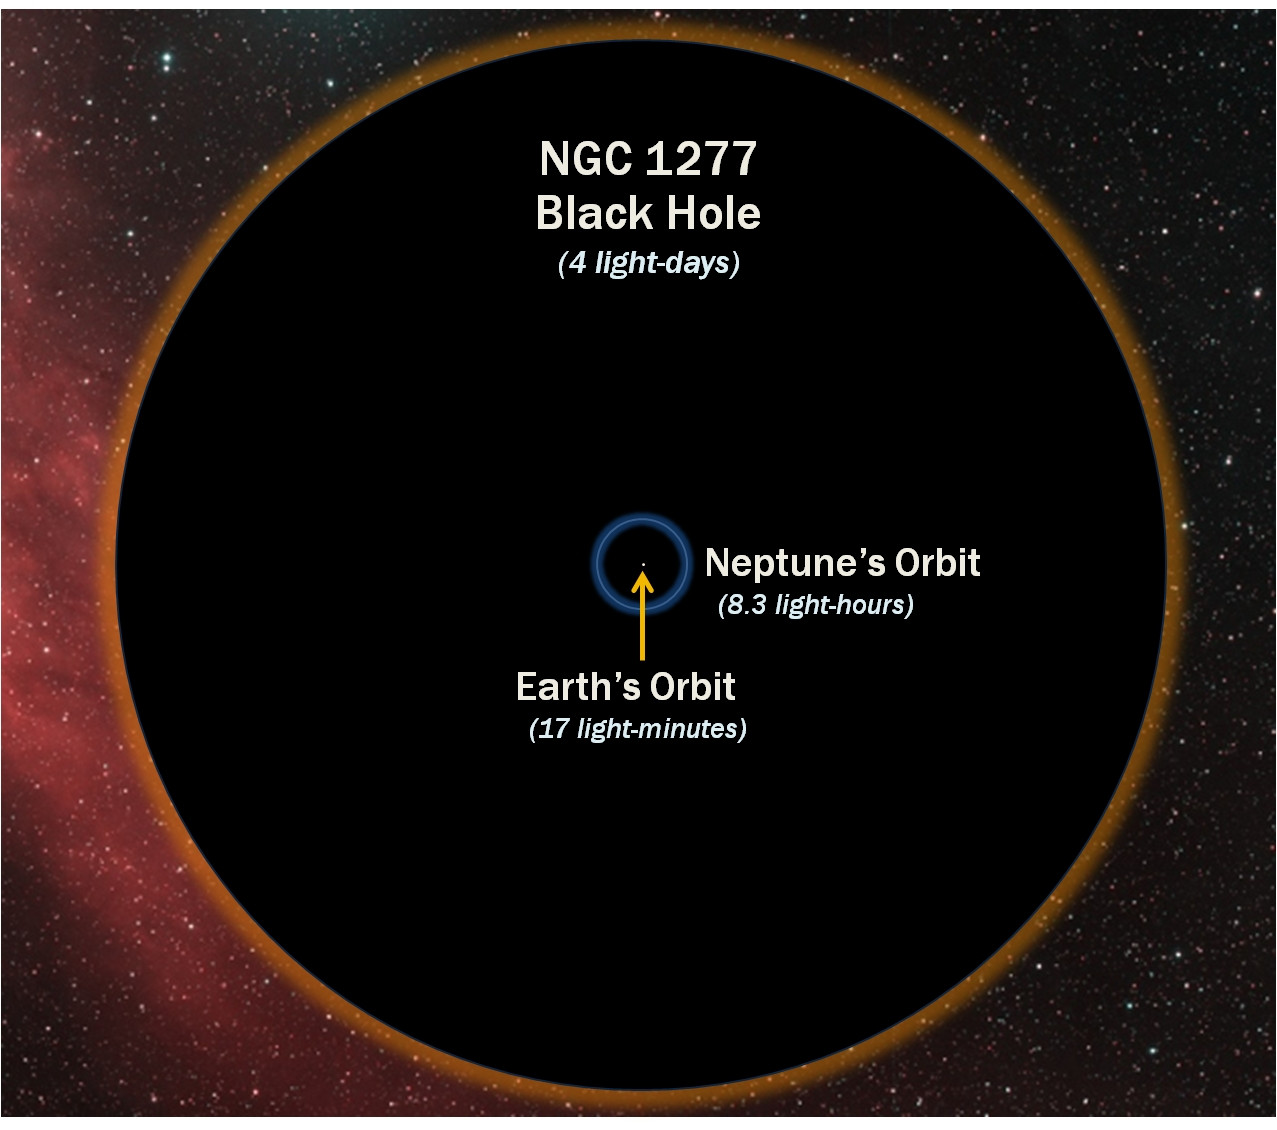 Supermassive Blackhole with 17 billion solar mass has 14 